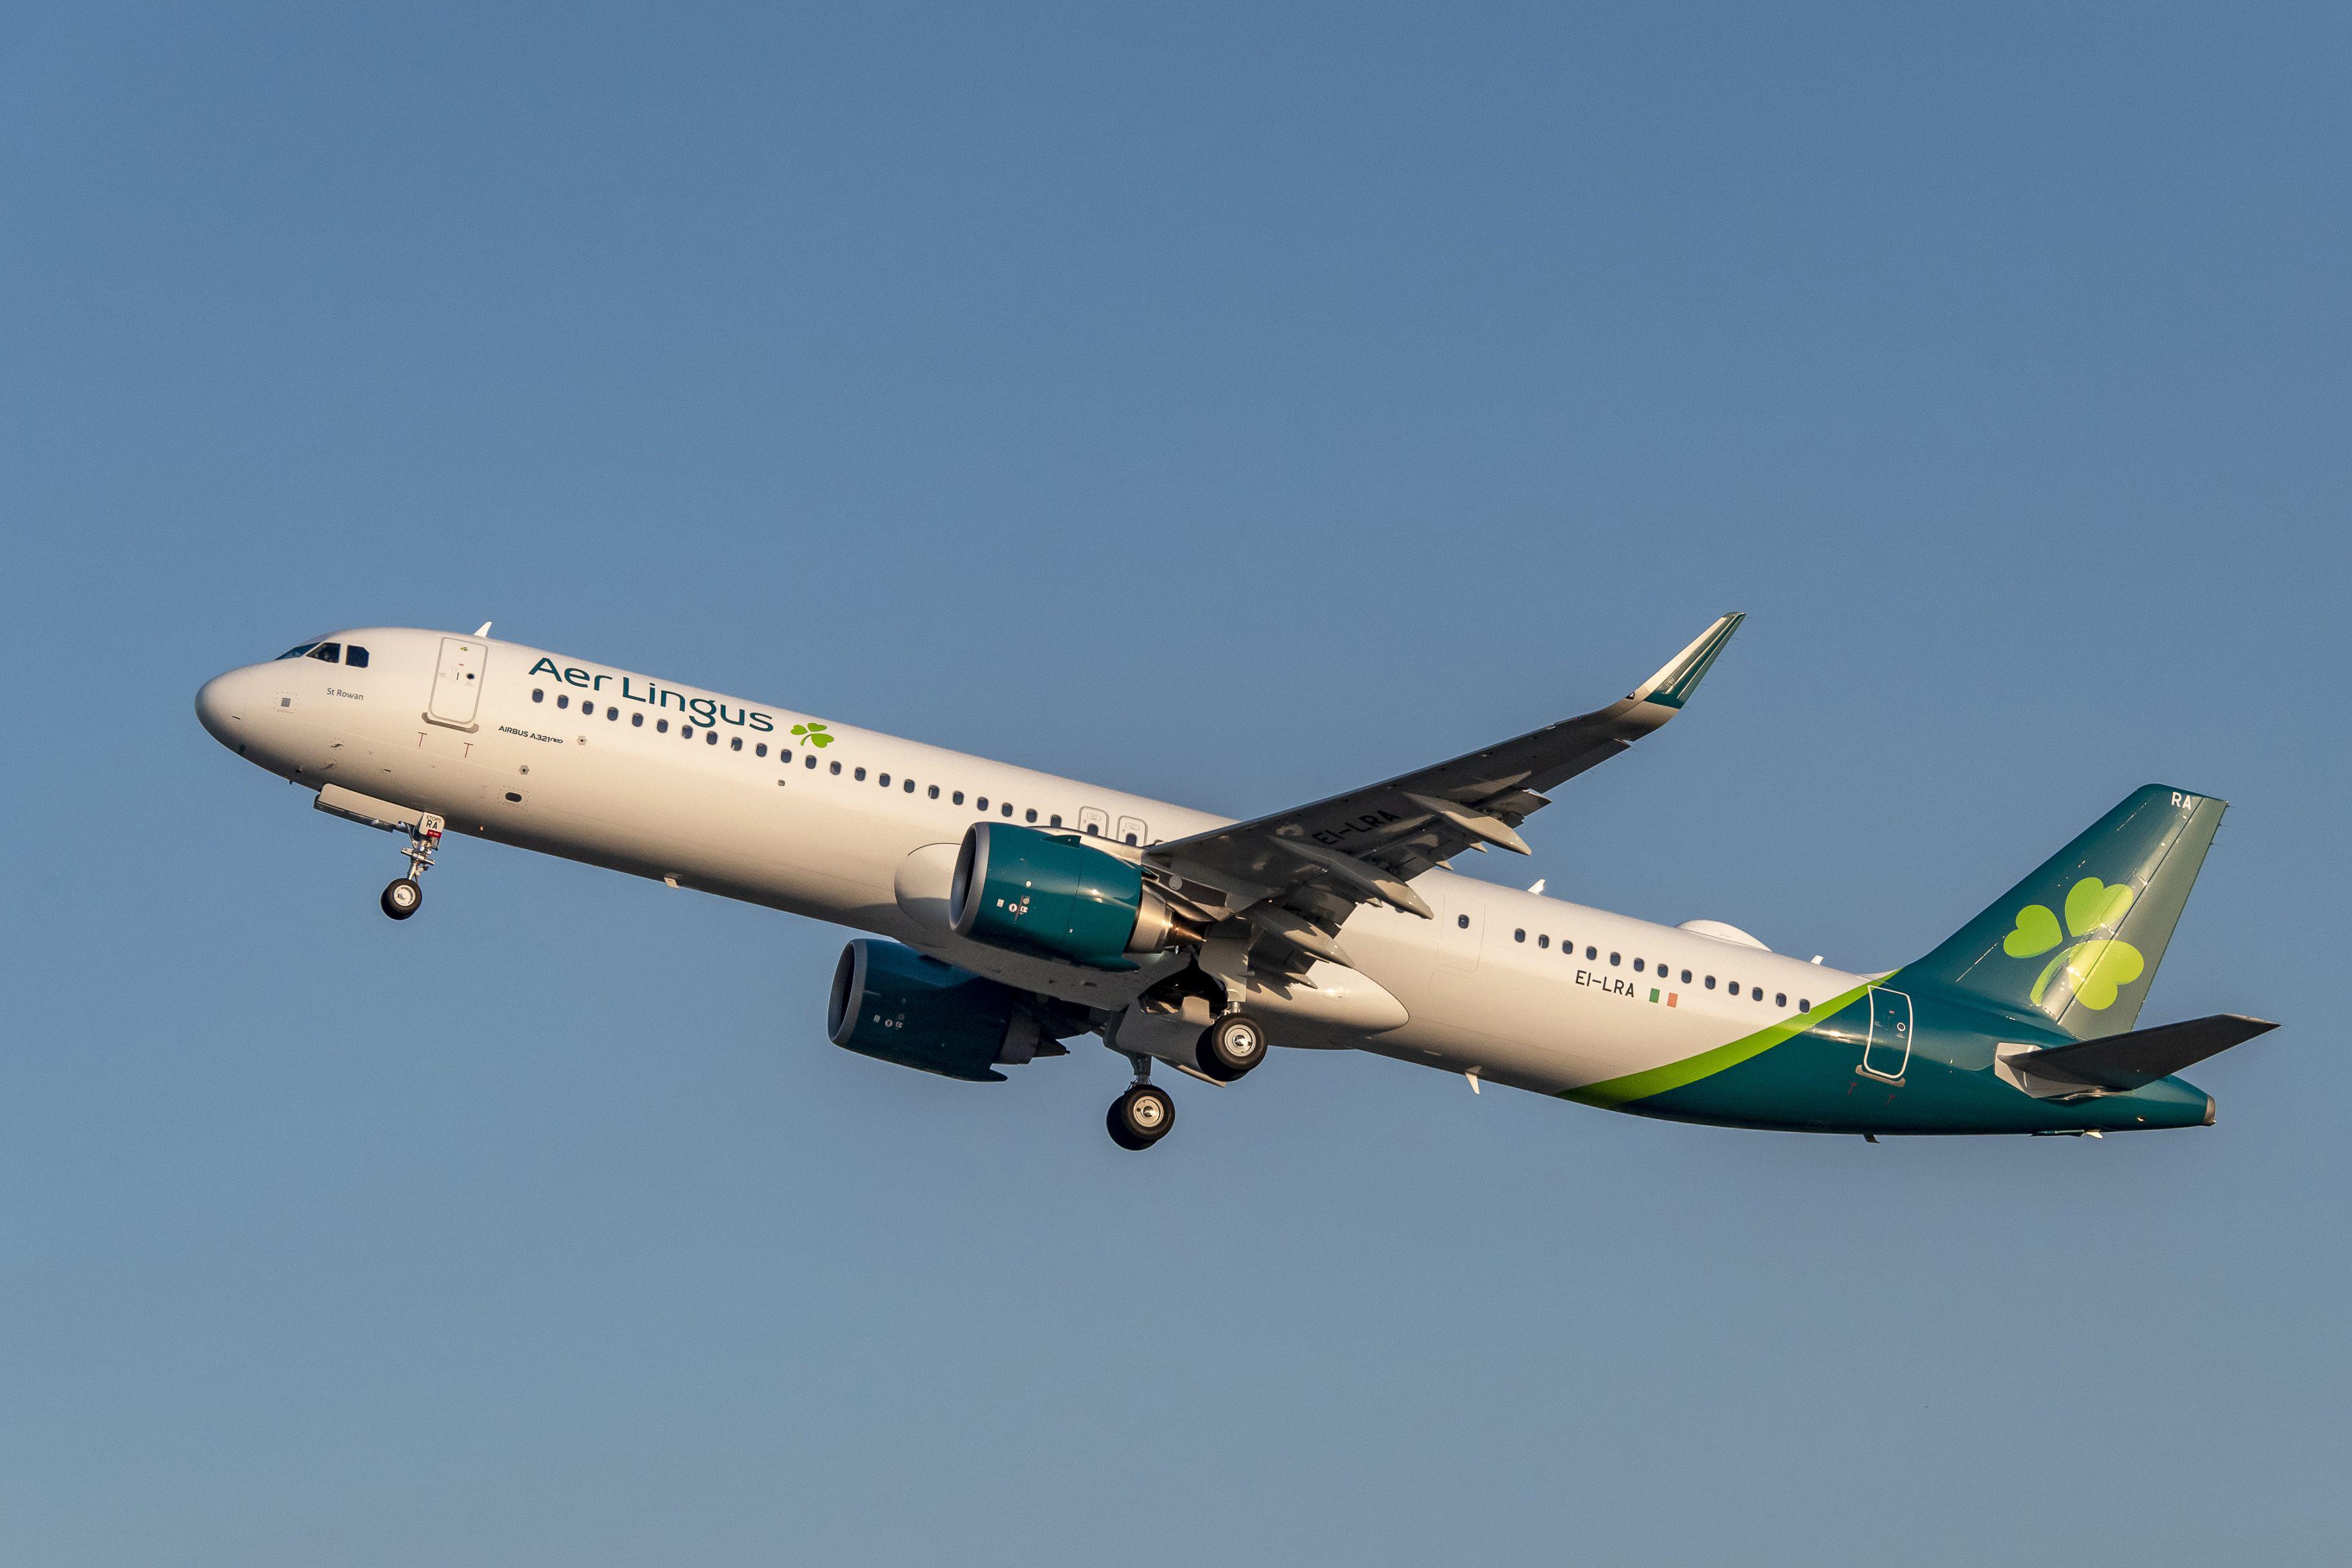 Aer Lingus A321neoLR